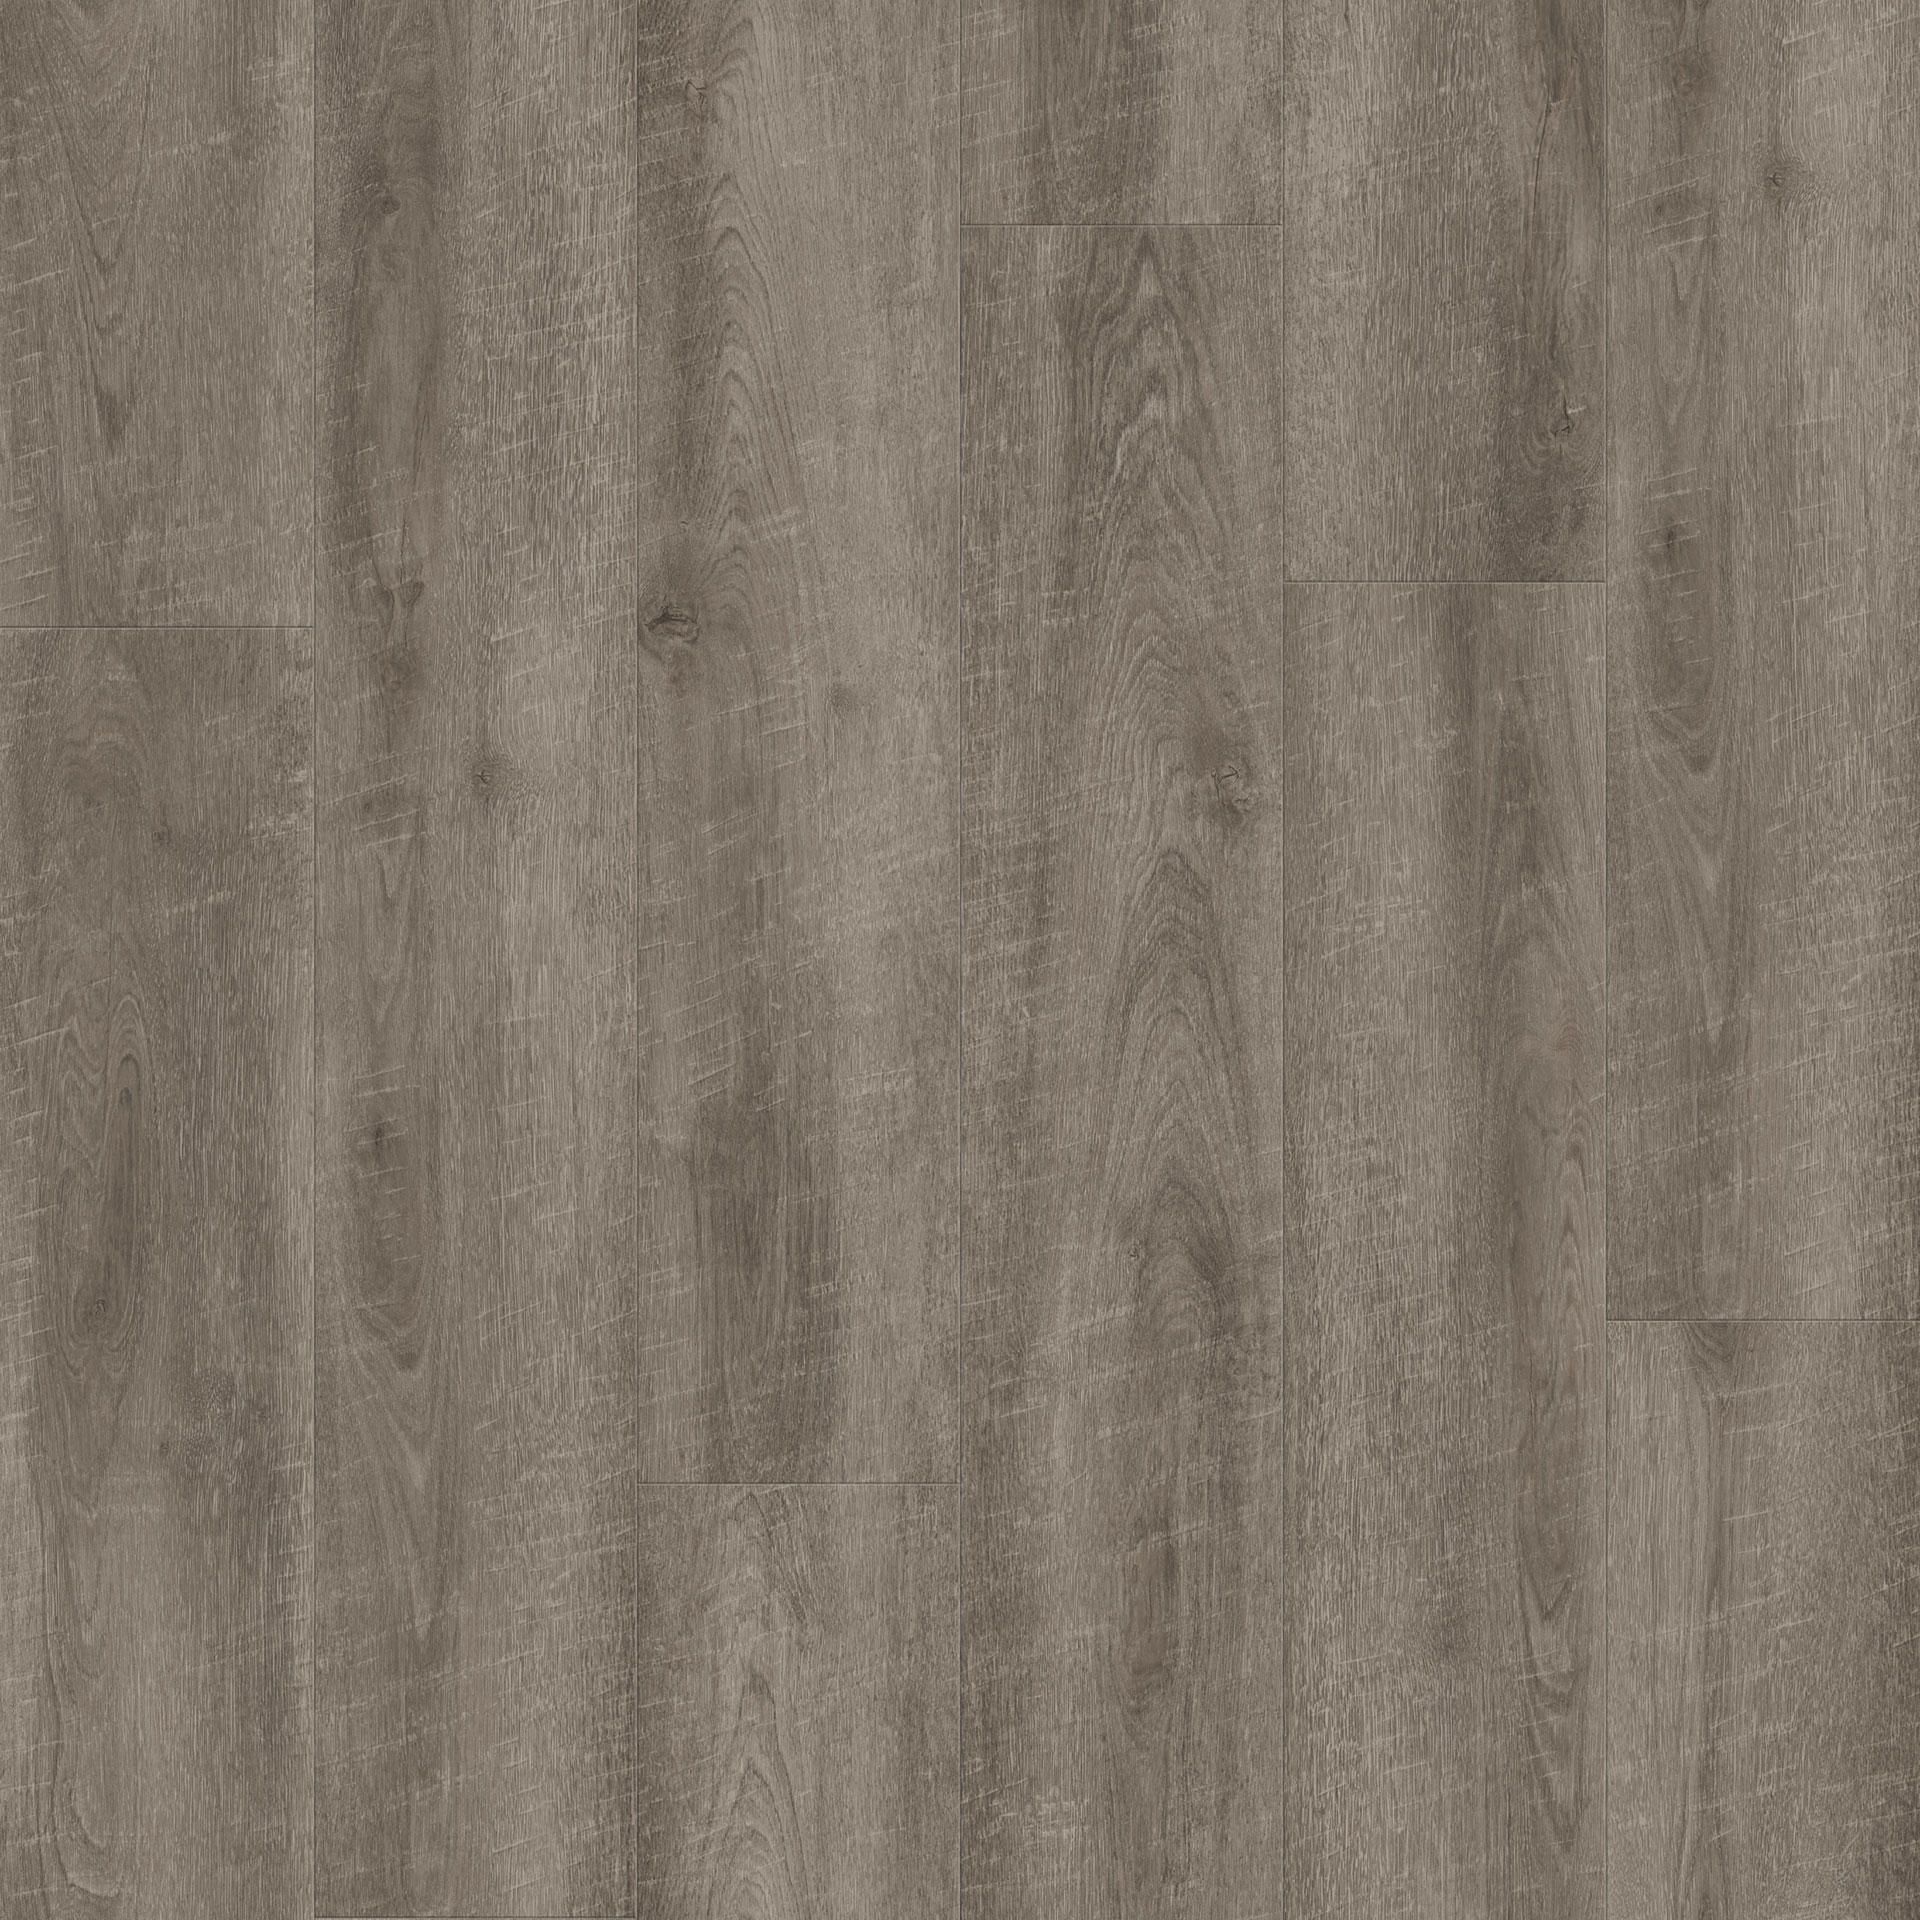 Tarkett iD Inspiration 30 CLASSICS Vinylplanke Antik Oak - Dark grey - grau 24524006